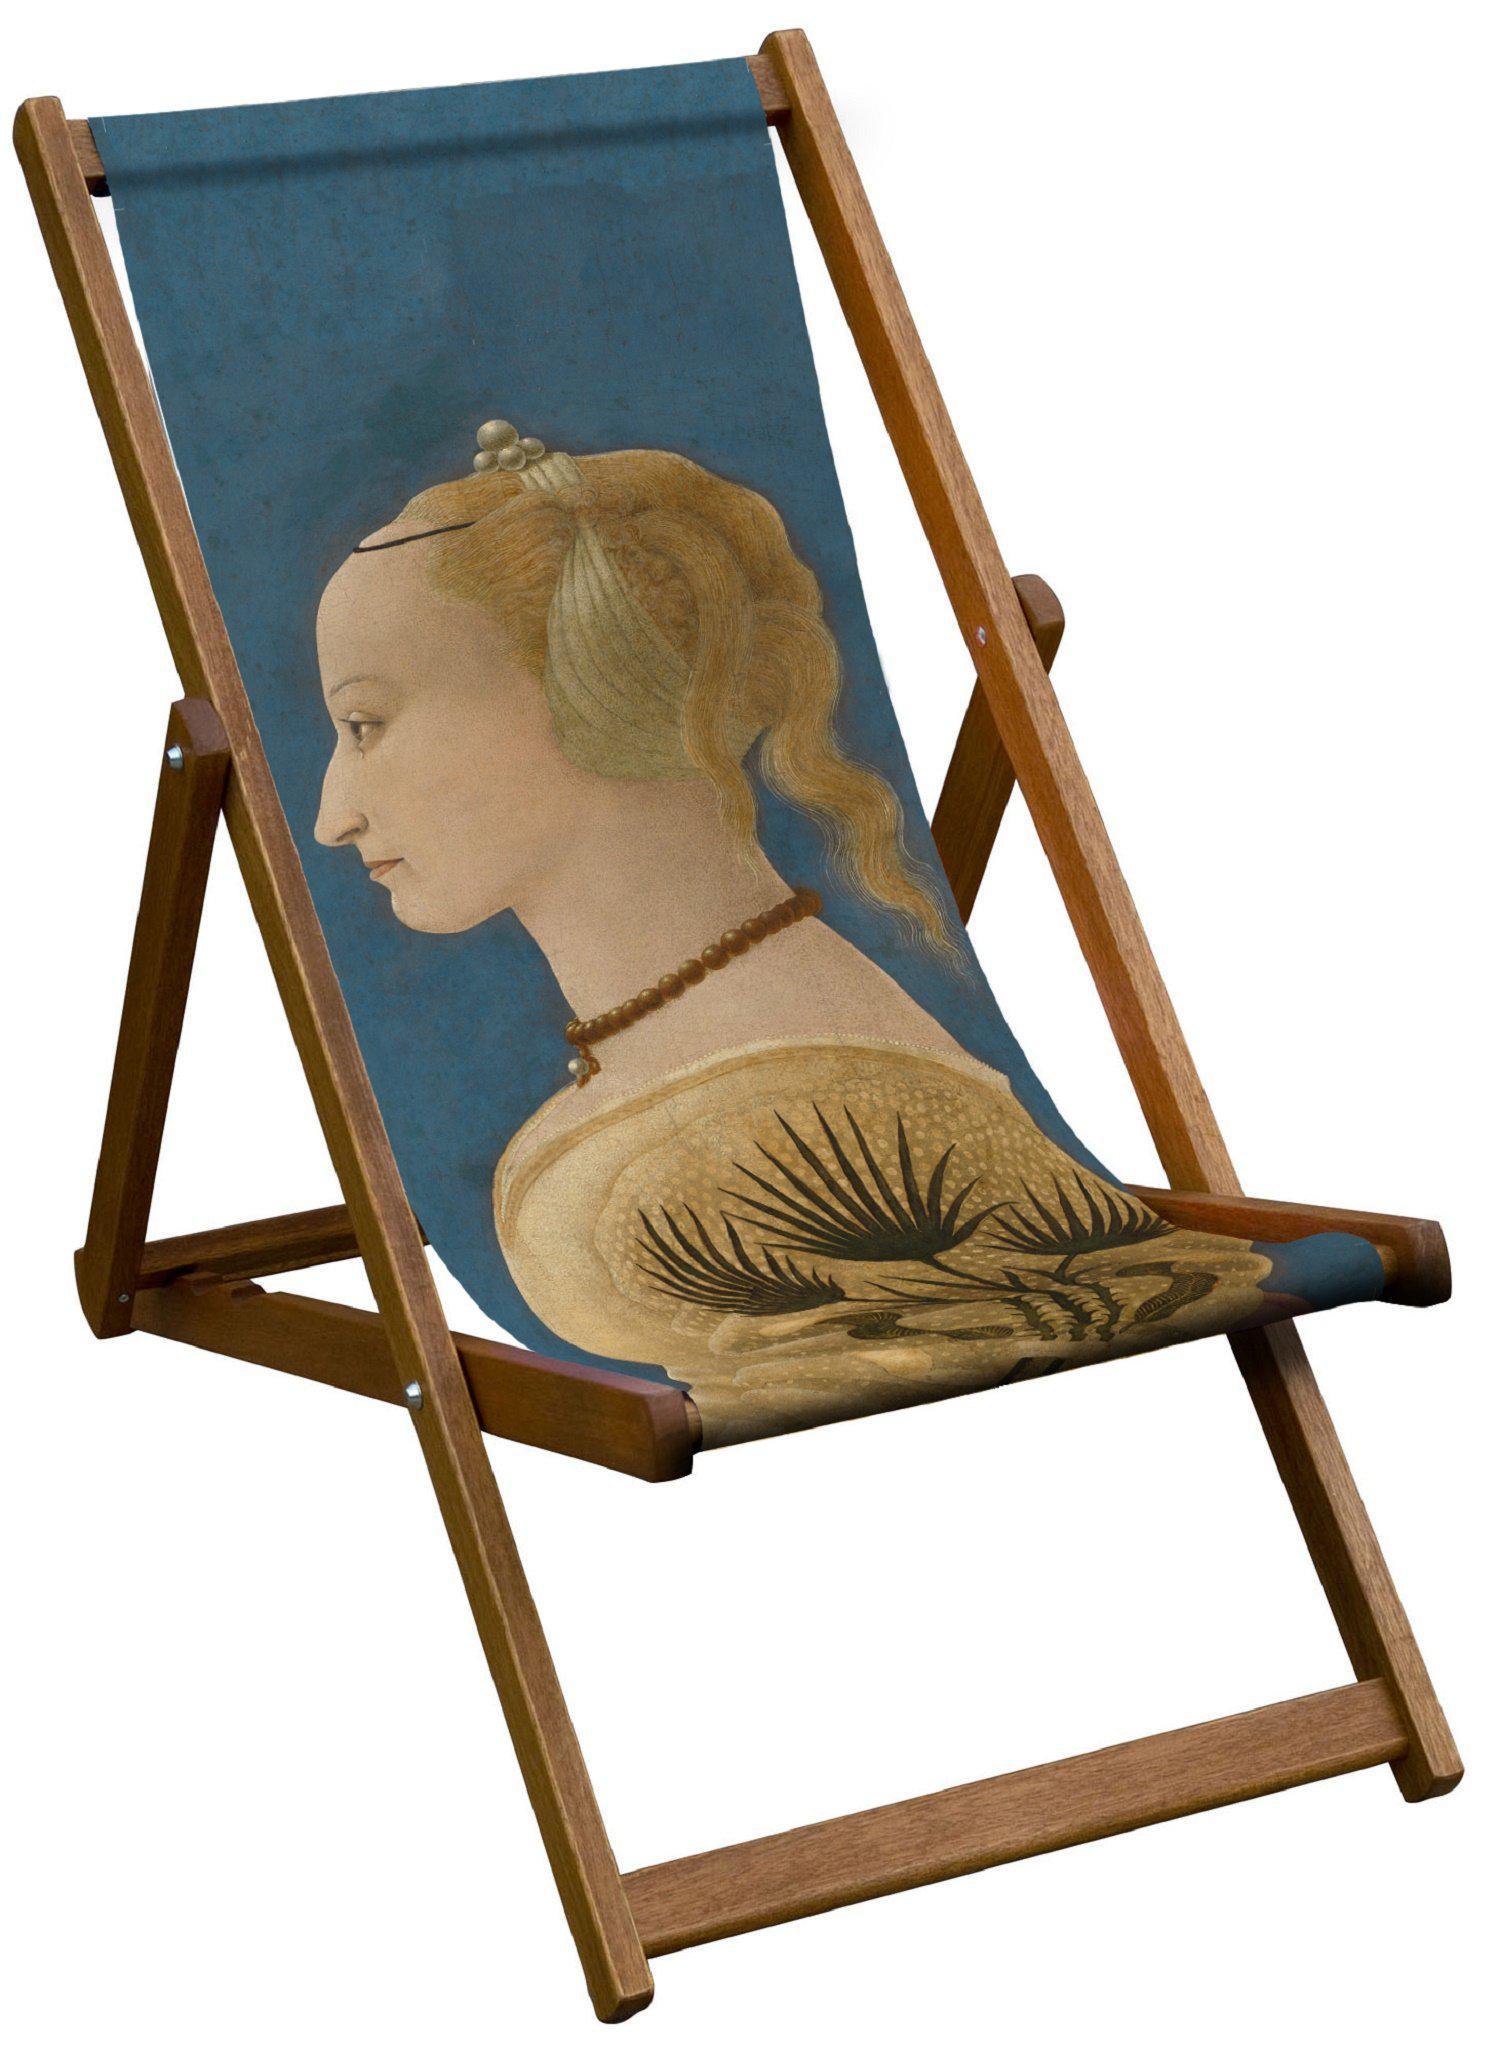 Portrait of a Lady - Alesso Baldovinetti - National Gallery Deckchair